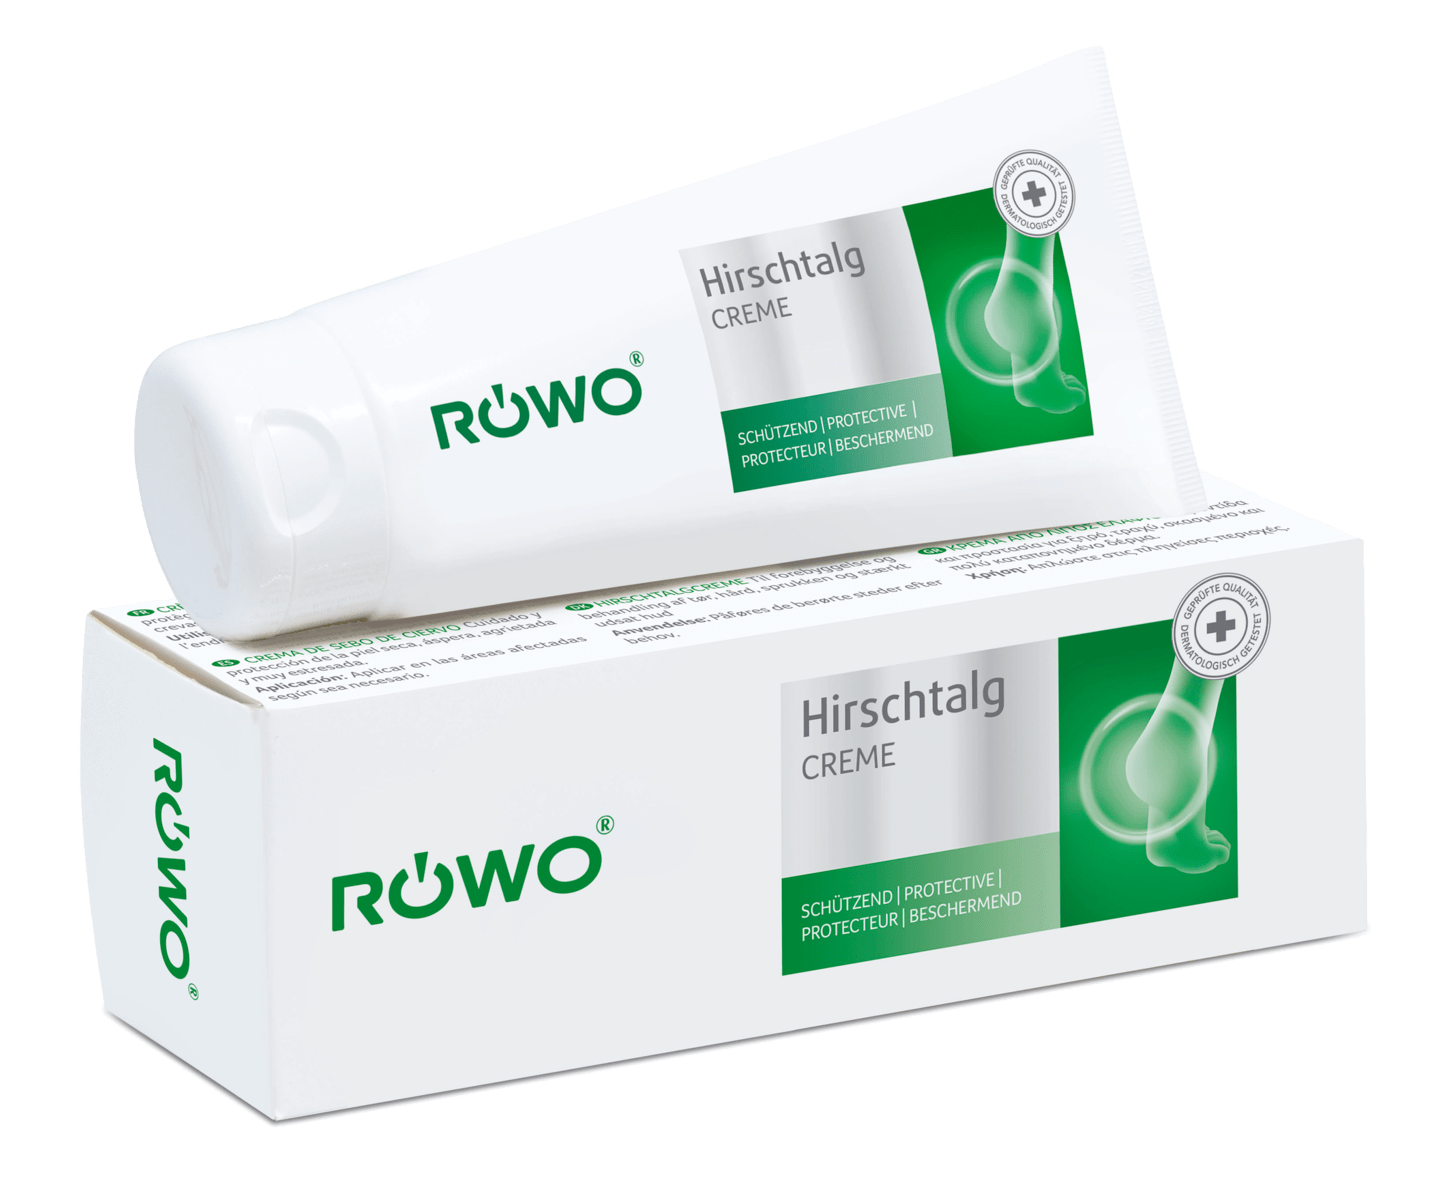 RÖWO - Hirschtalgcreme, 100 ml